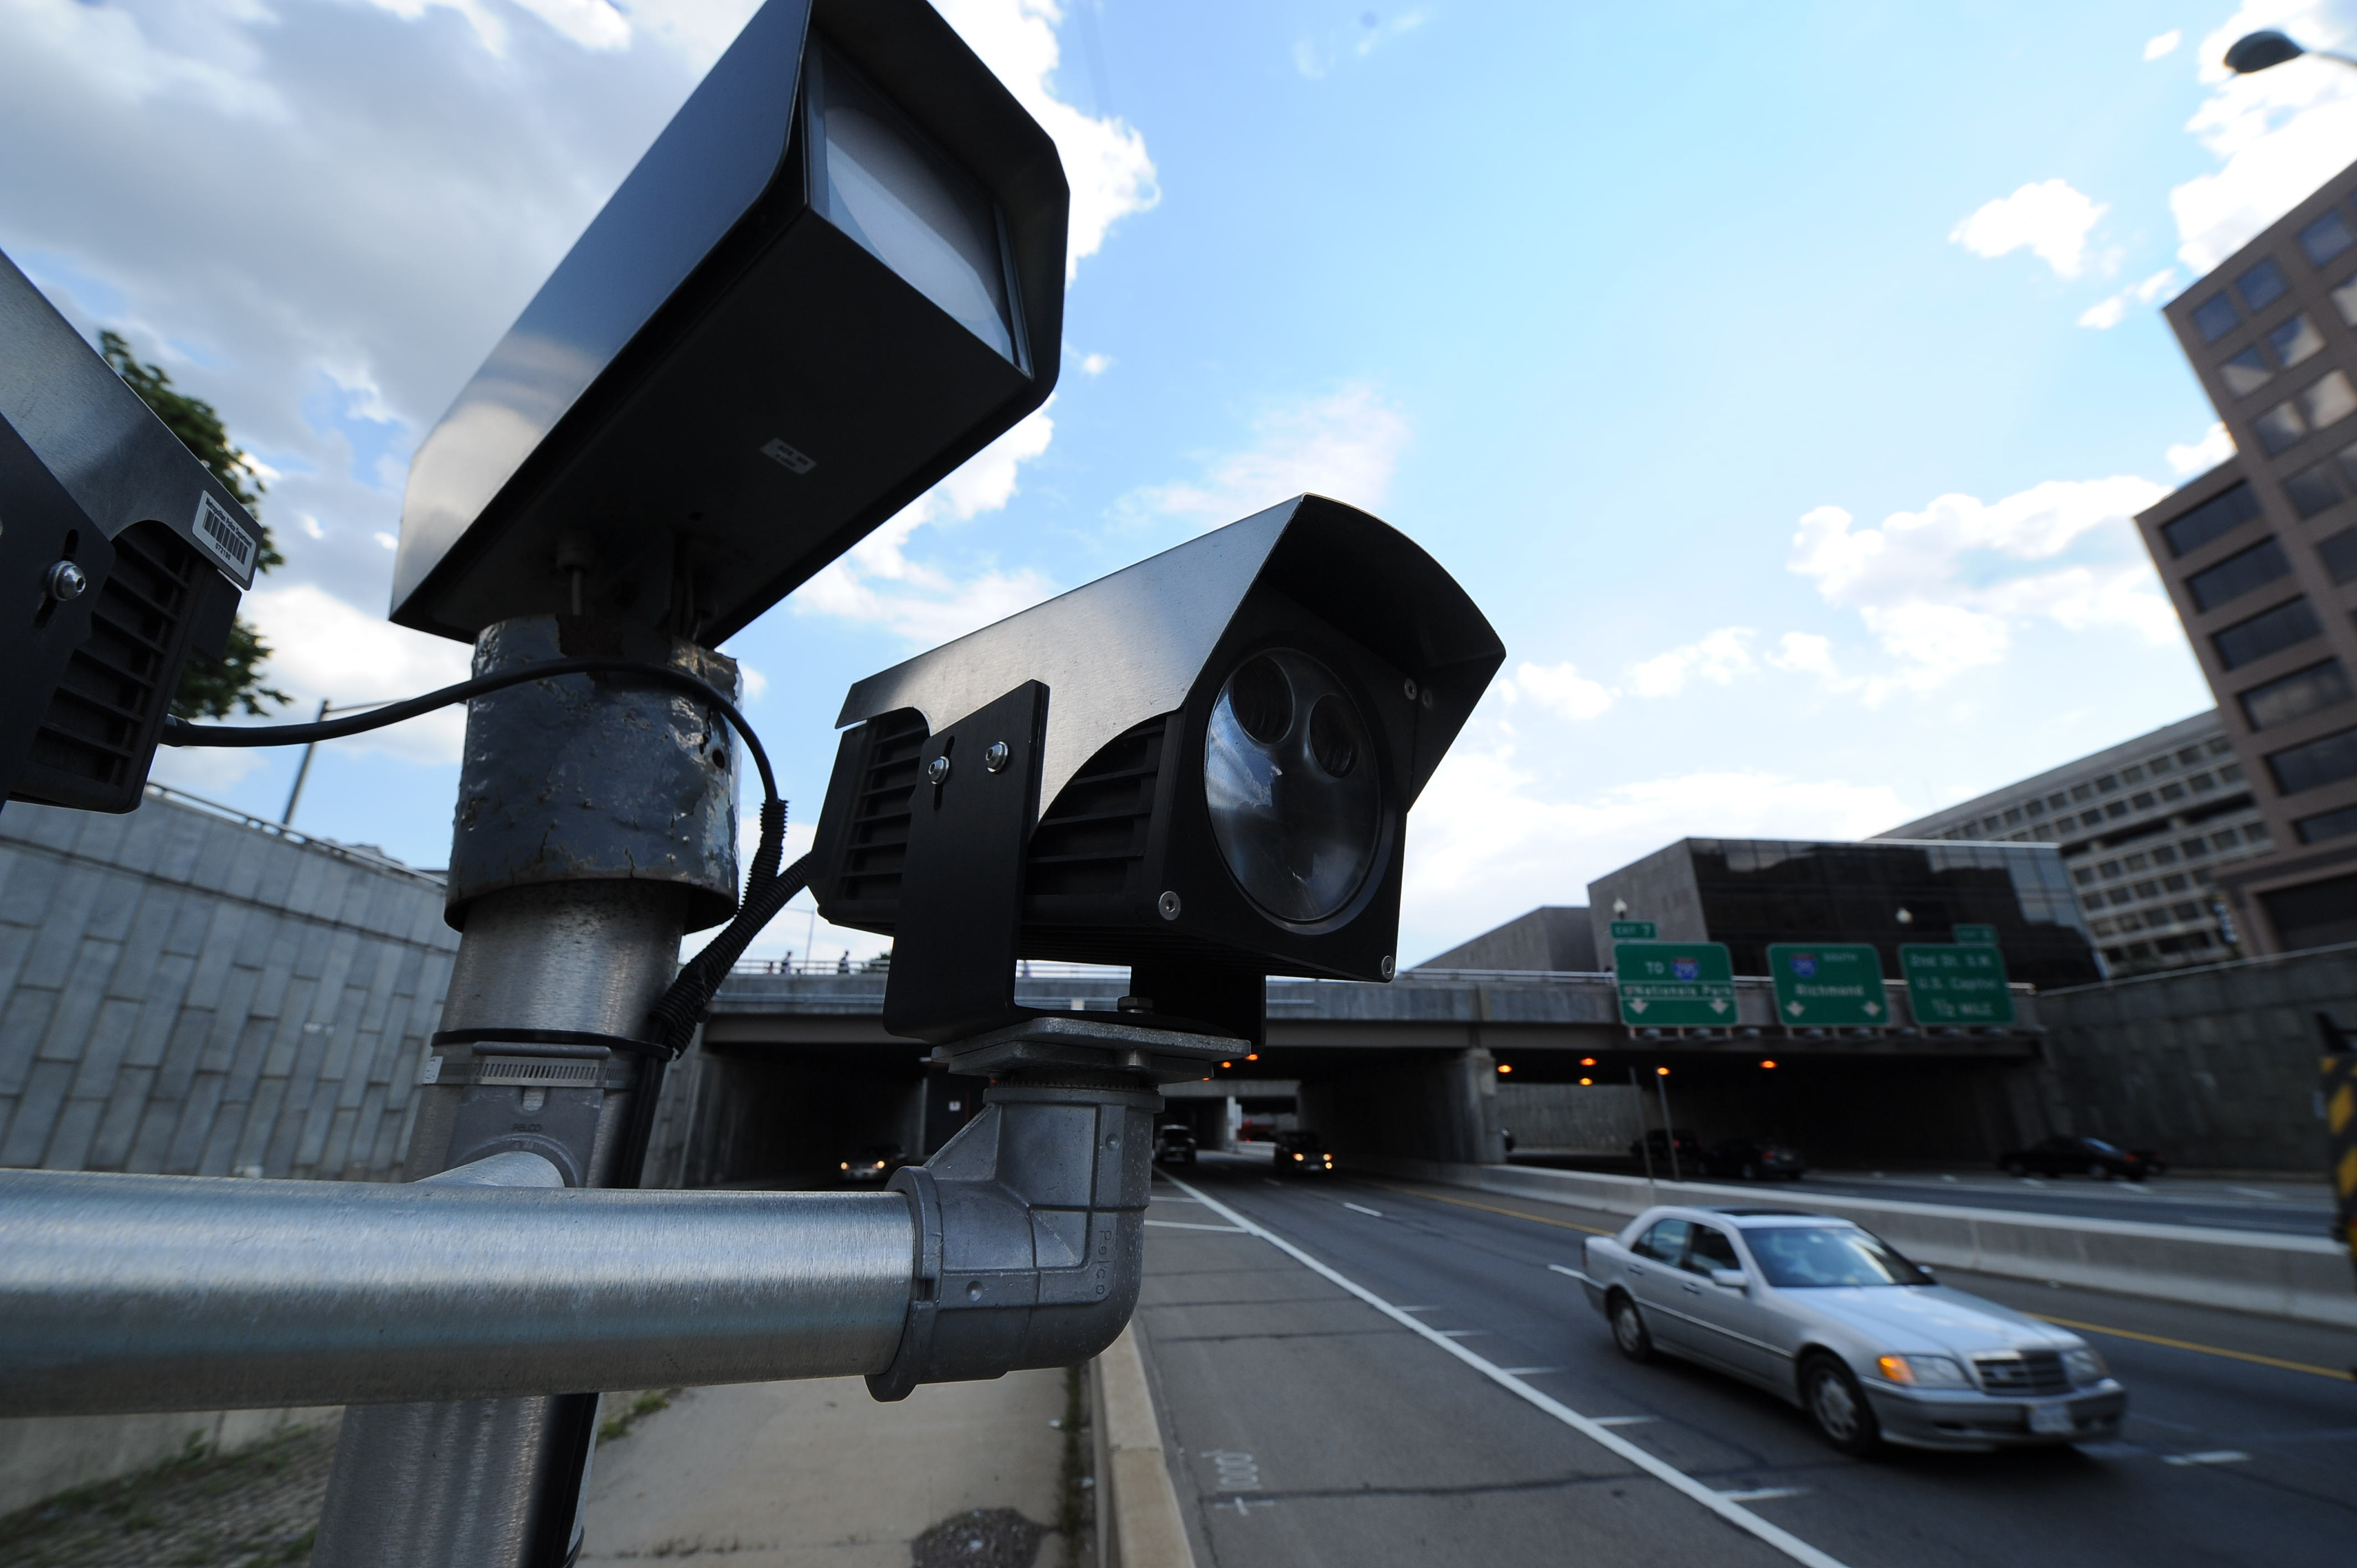 Speed cameras capture motorists on I-395 near 2nd Street NW in Washington, DC on June 7, 2012. (Daniel Britt—Washington Post/Getty Images)